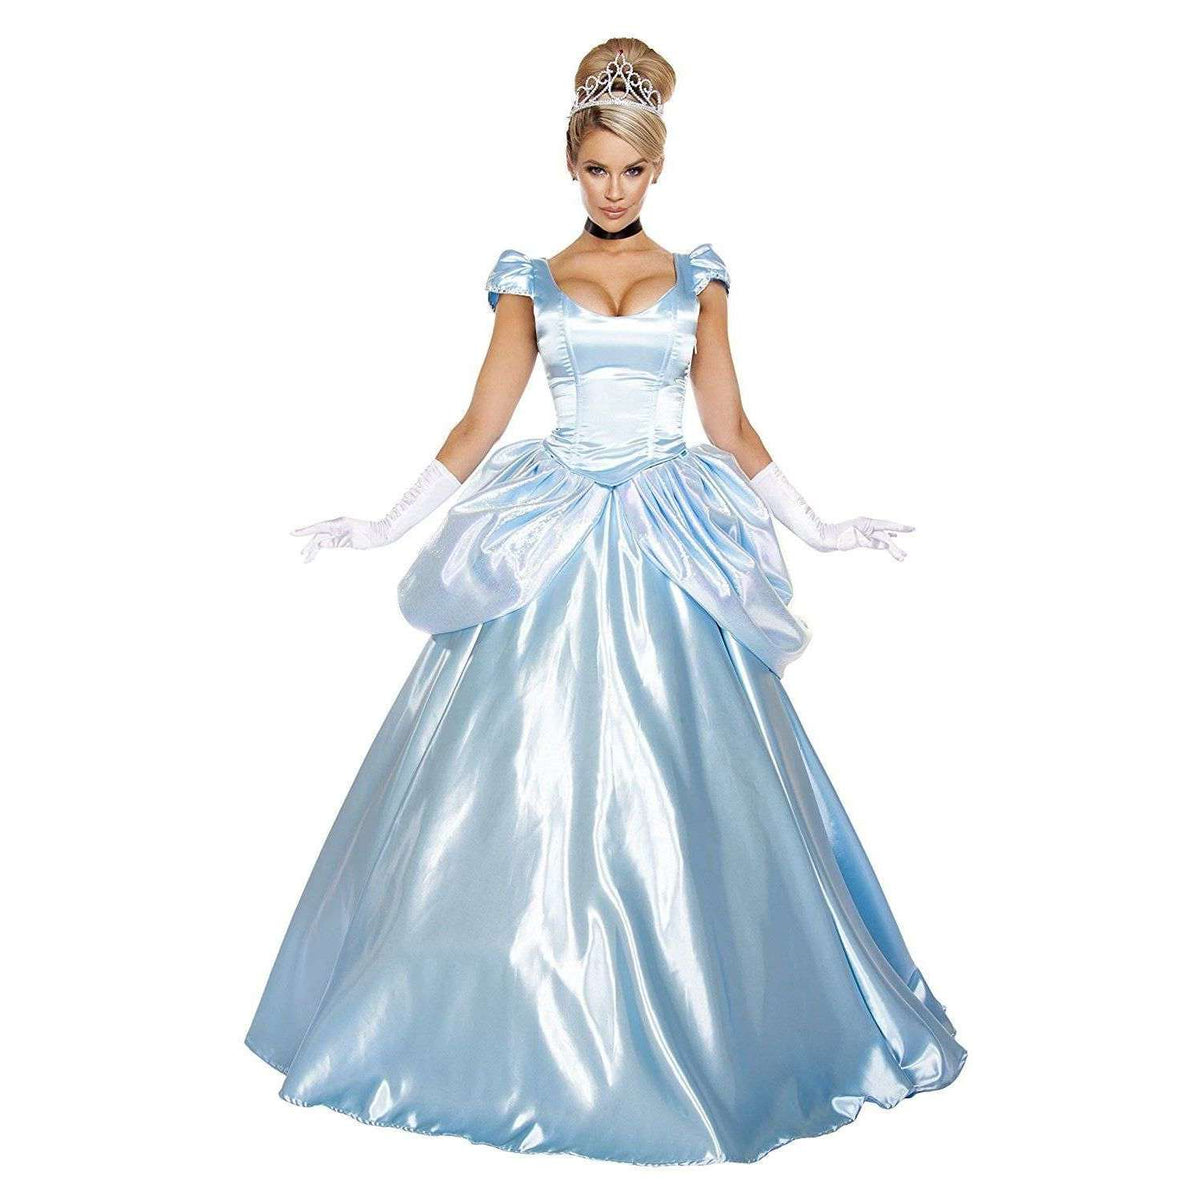 Stroke of Midnight Maiden Cinderella Blue Ball Gown Dress Adult Costume